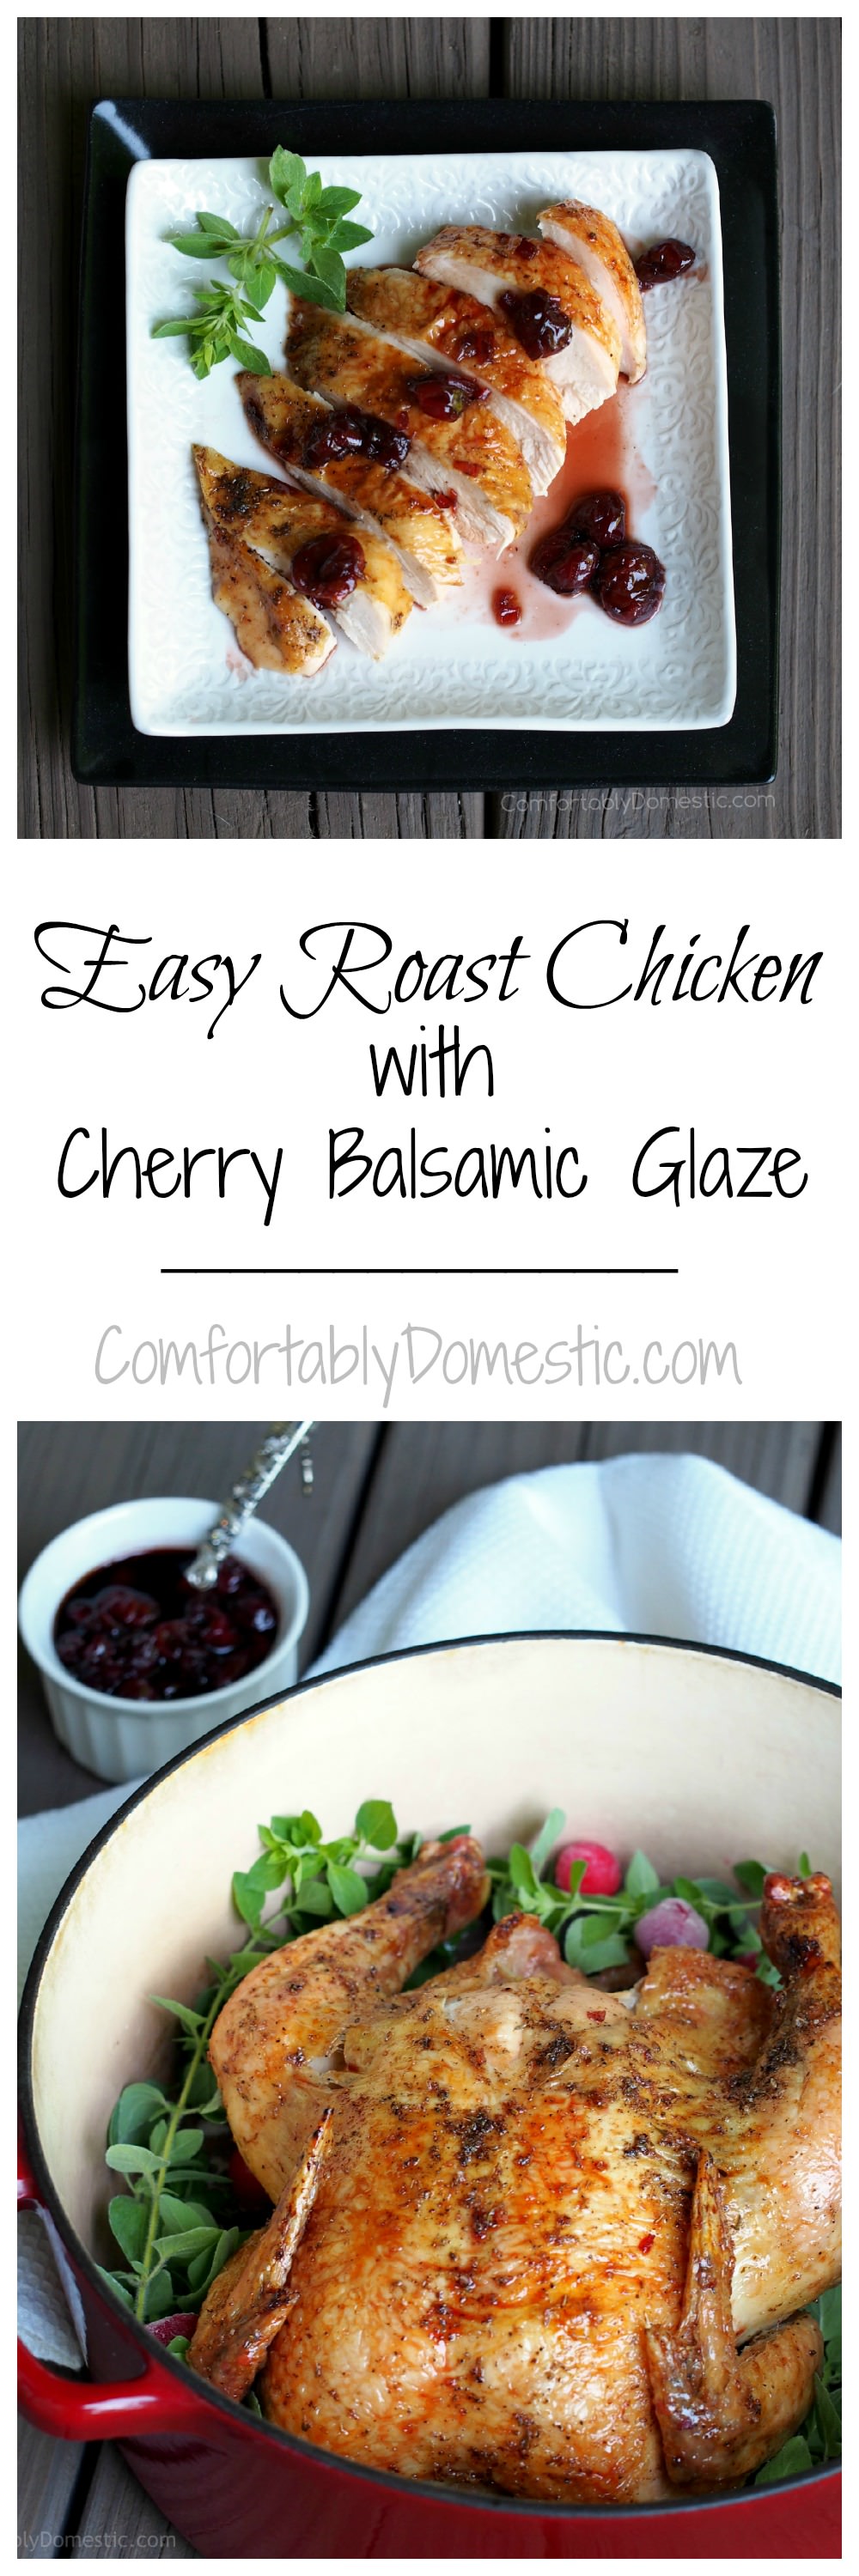 Easy-Roast-Chicken-with-Cherry-Balsamic-Glaze | ComfortablyDomestic.com